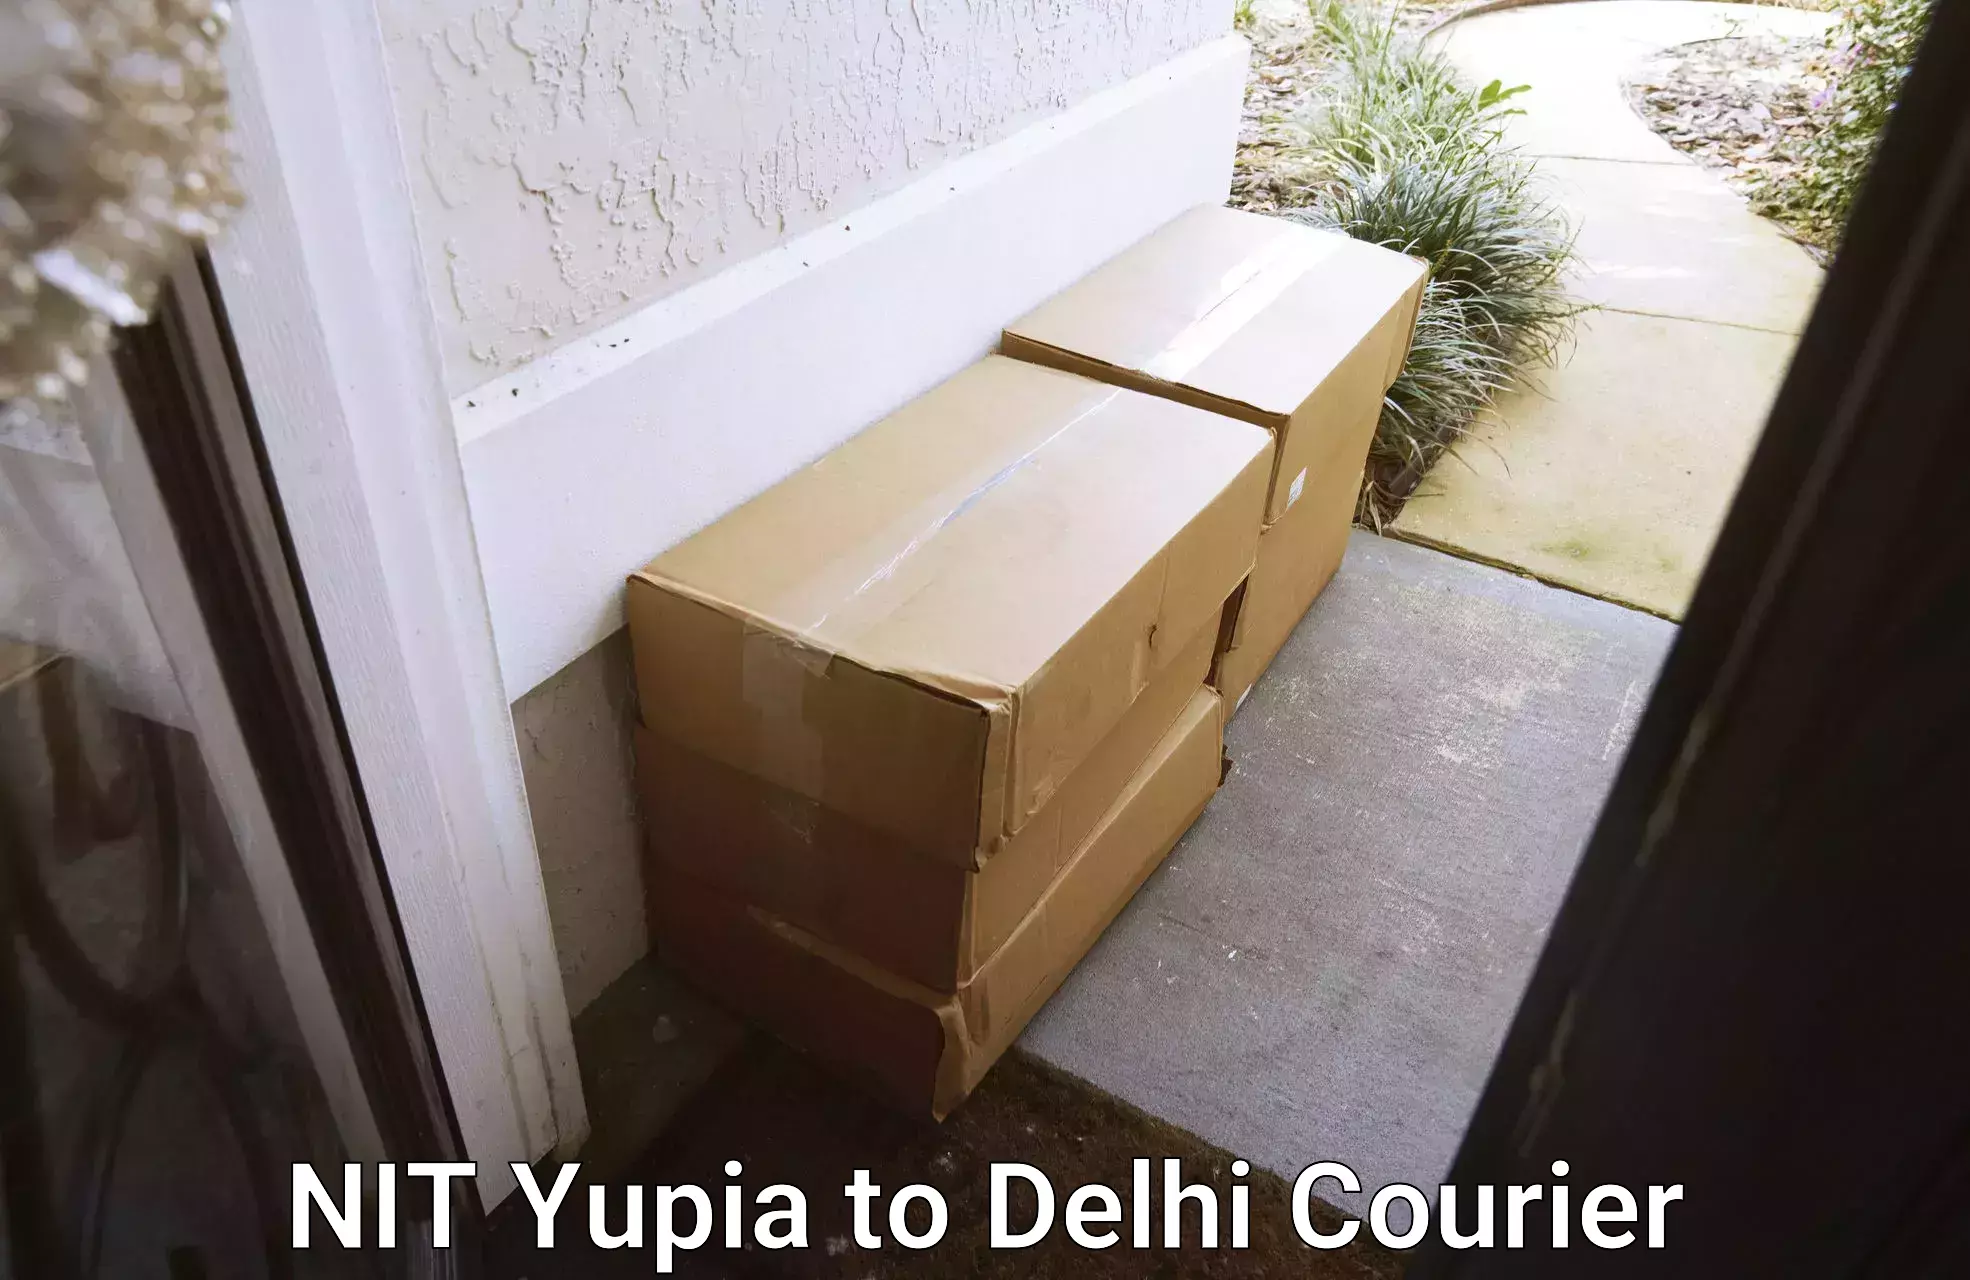 Courier service efficiency NIT Yupia to Delhi